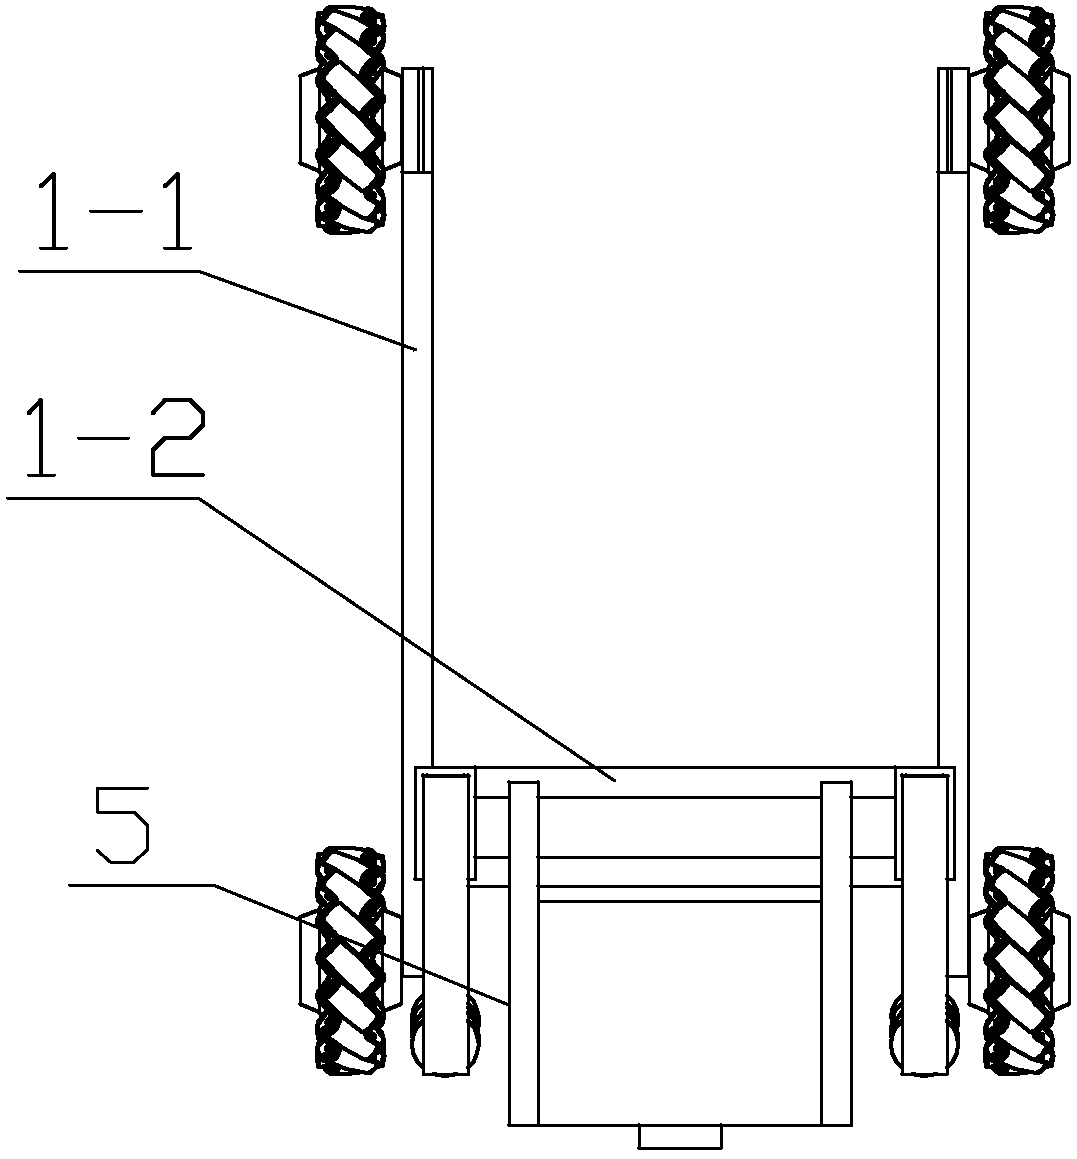 Omni-directional rollator driven by mecanum wheels